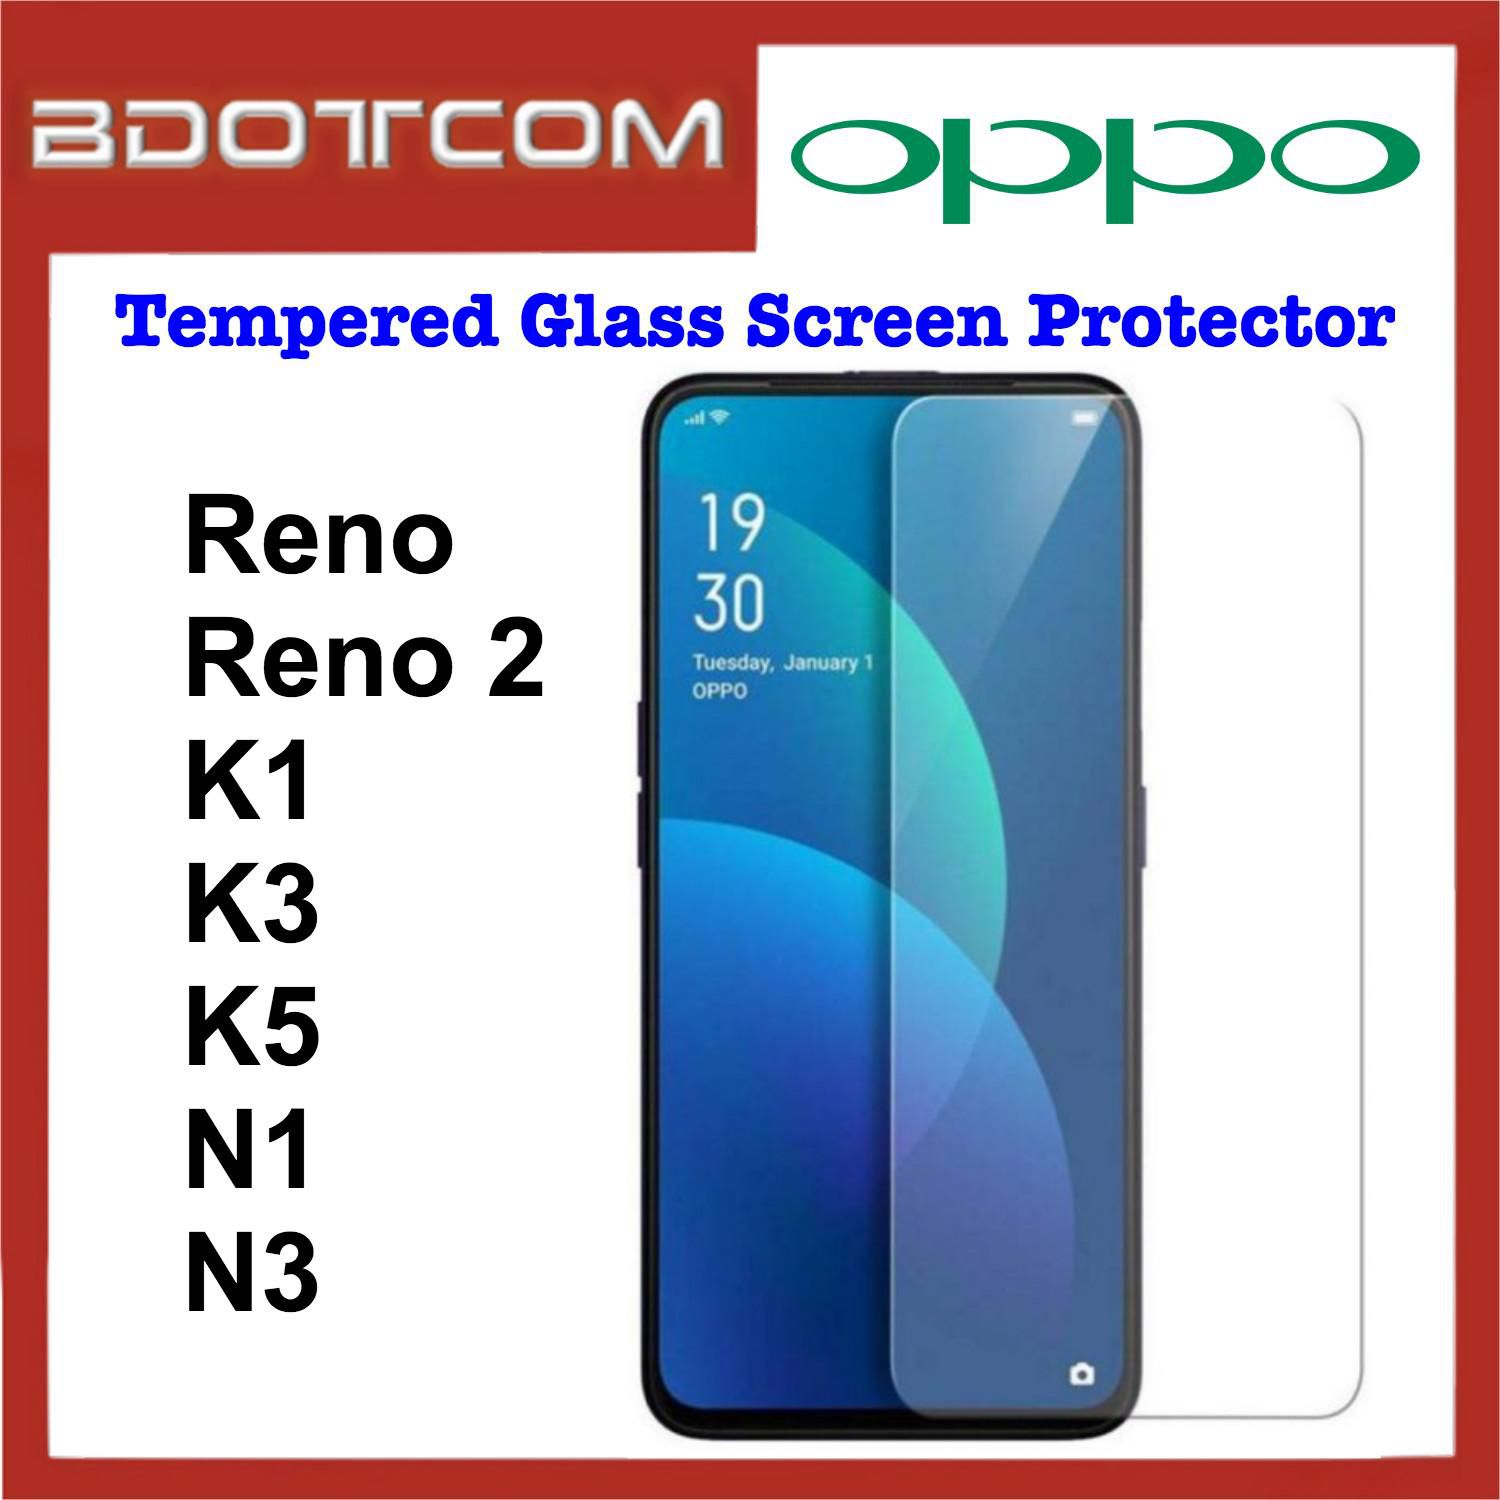 Bdotcom Tempered Glass Screen Protector for Oppo Reno